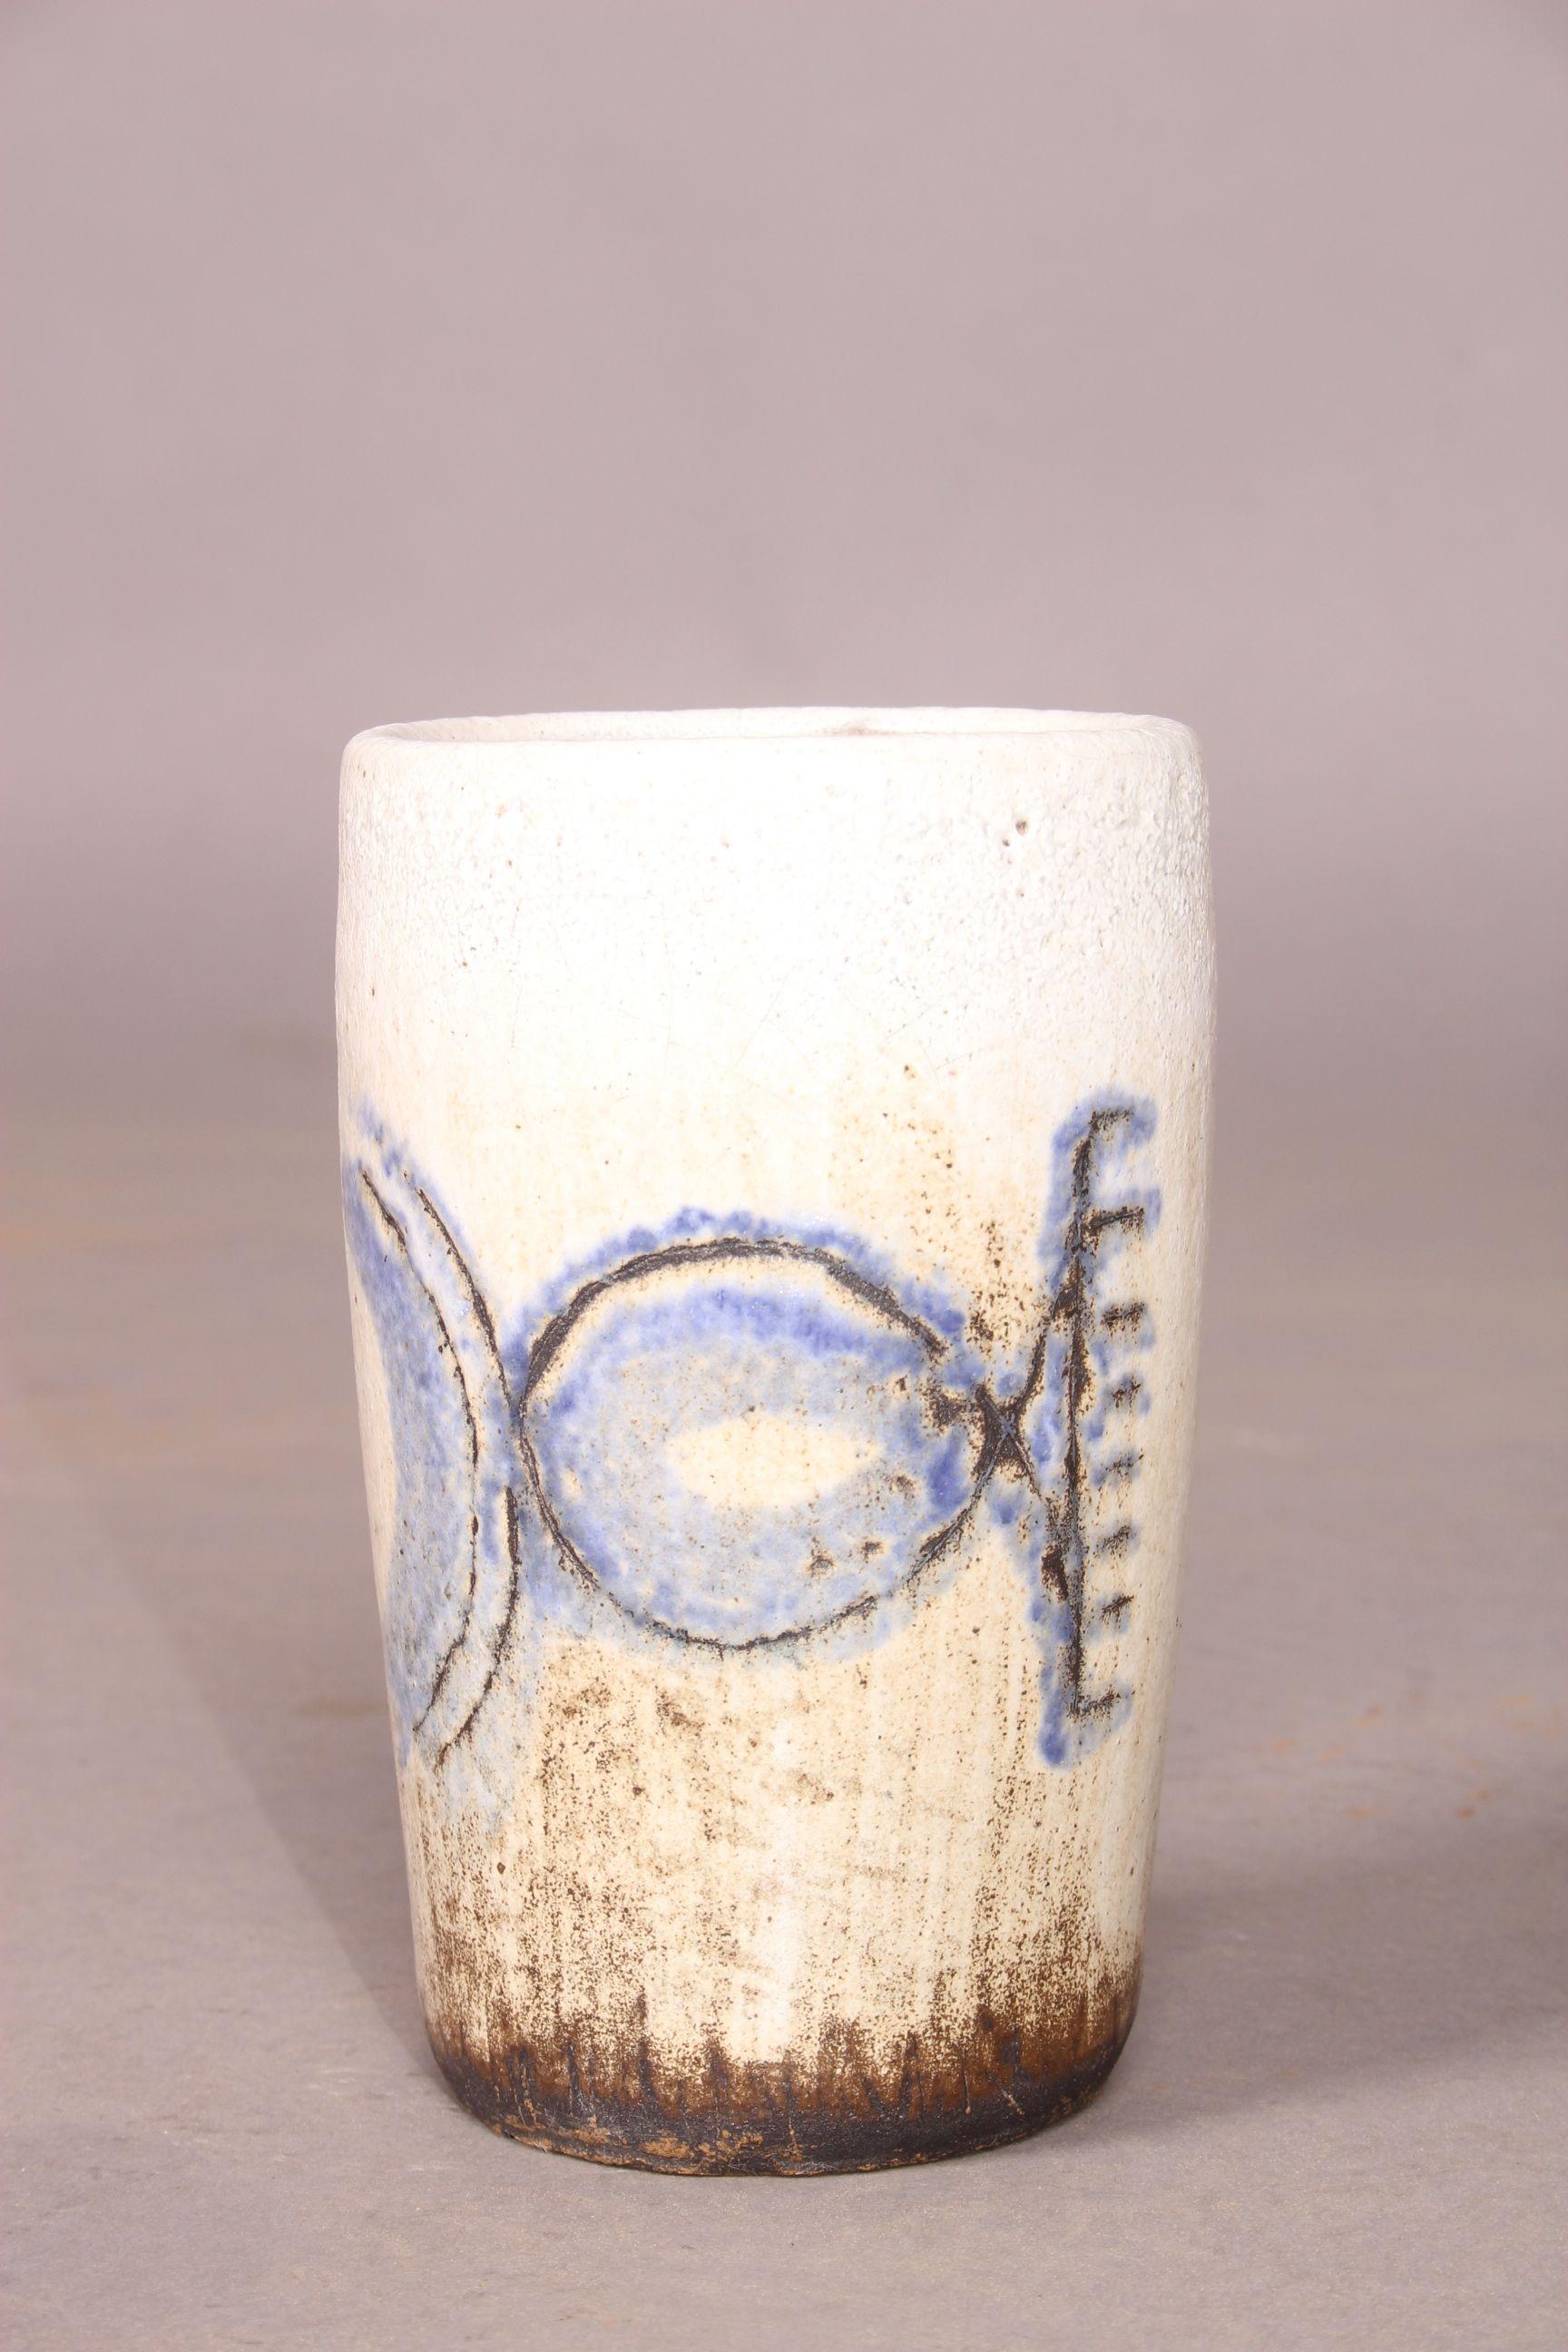 Ceramic pitcher.